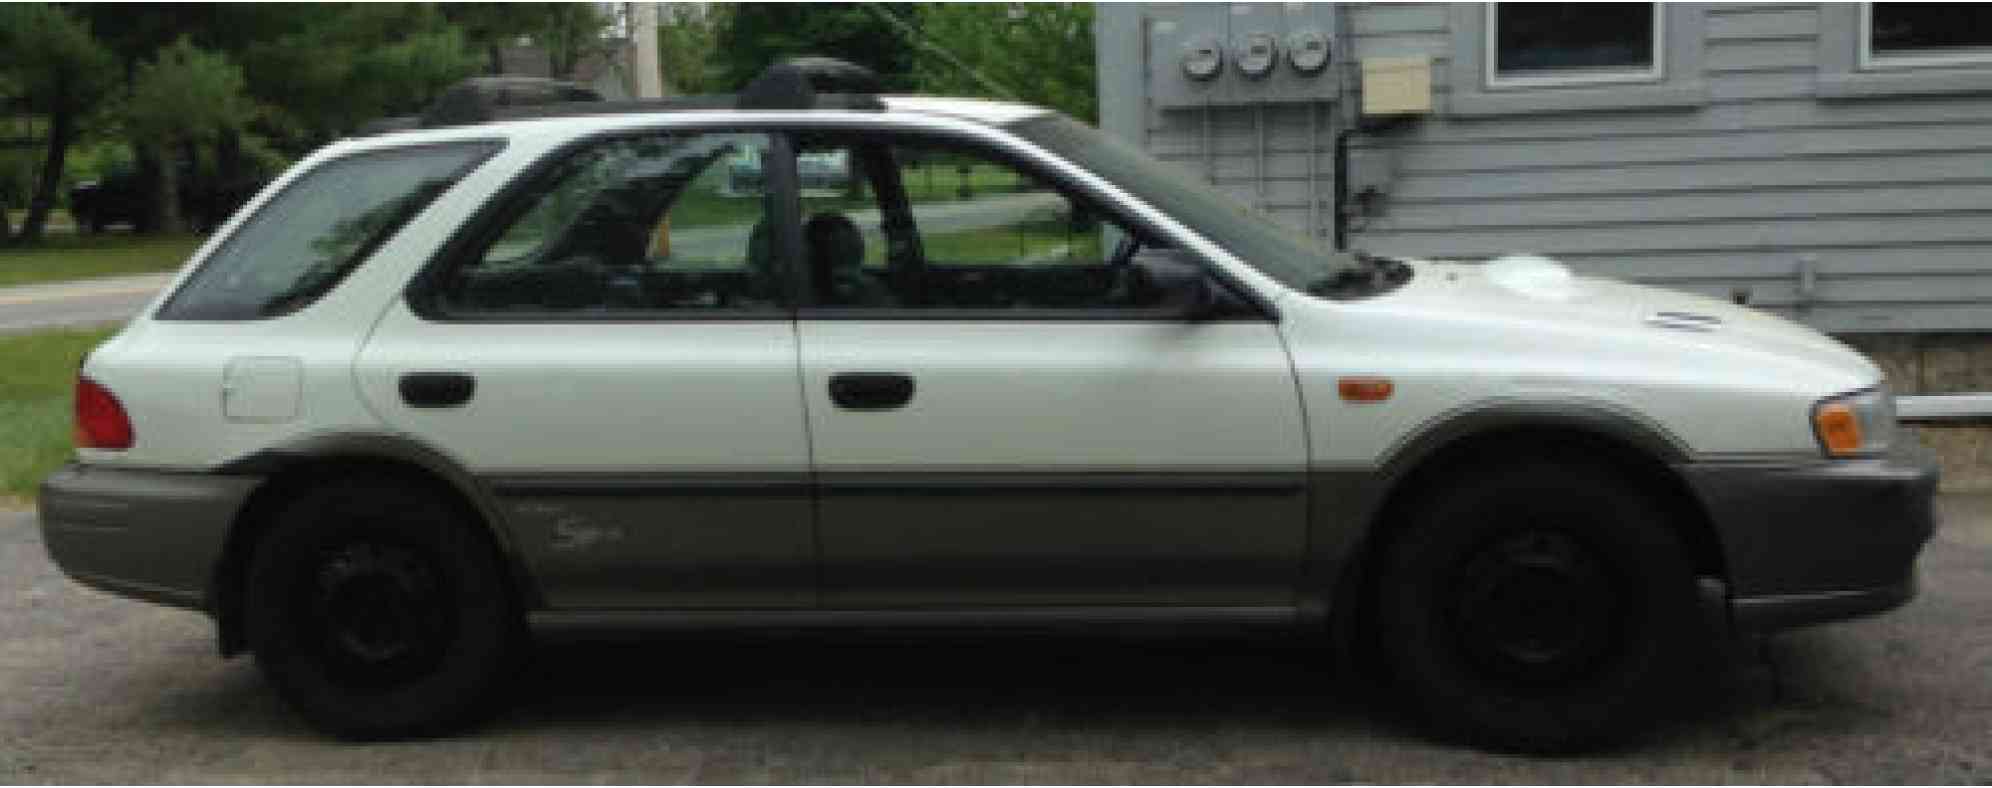 Subaru Impreza (1997)